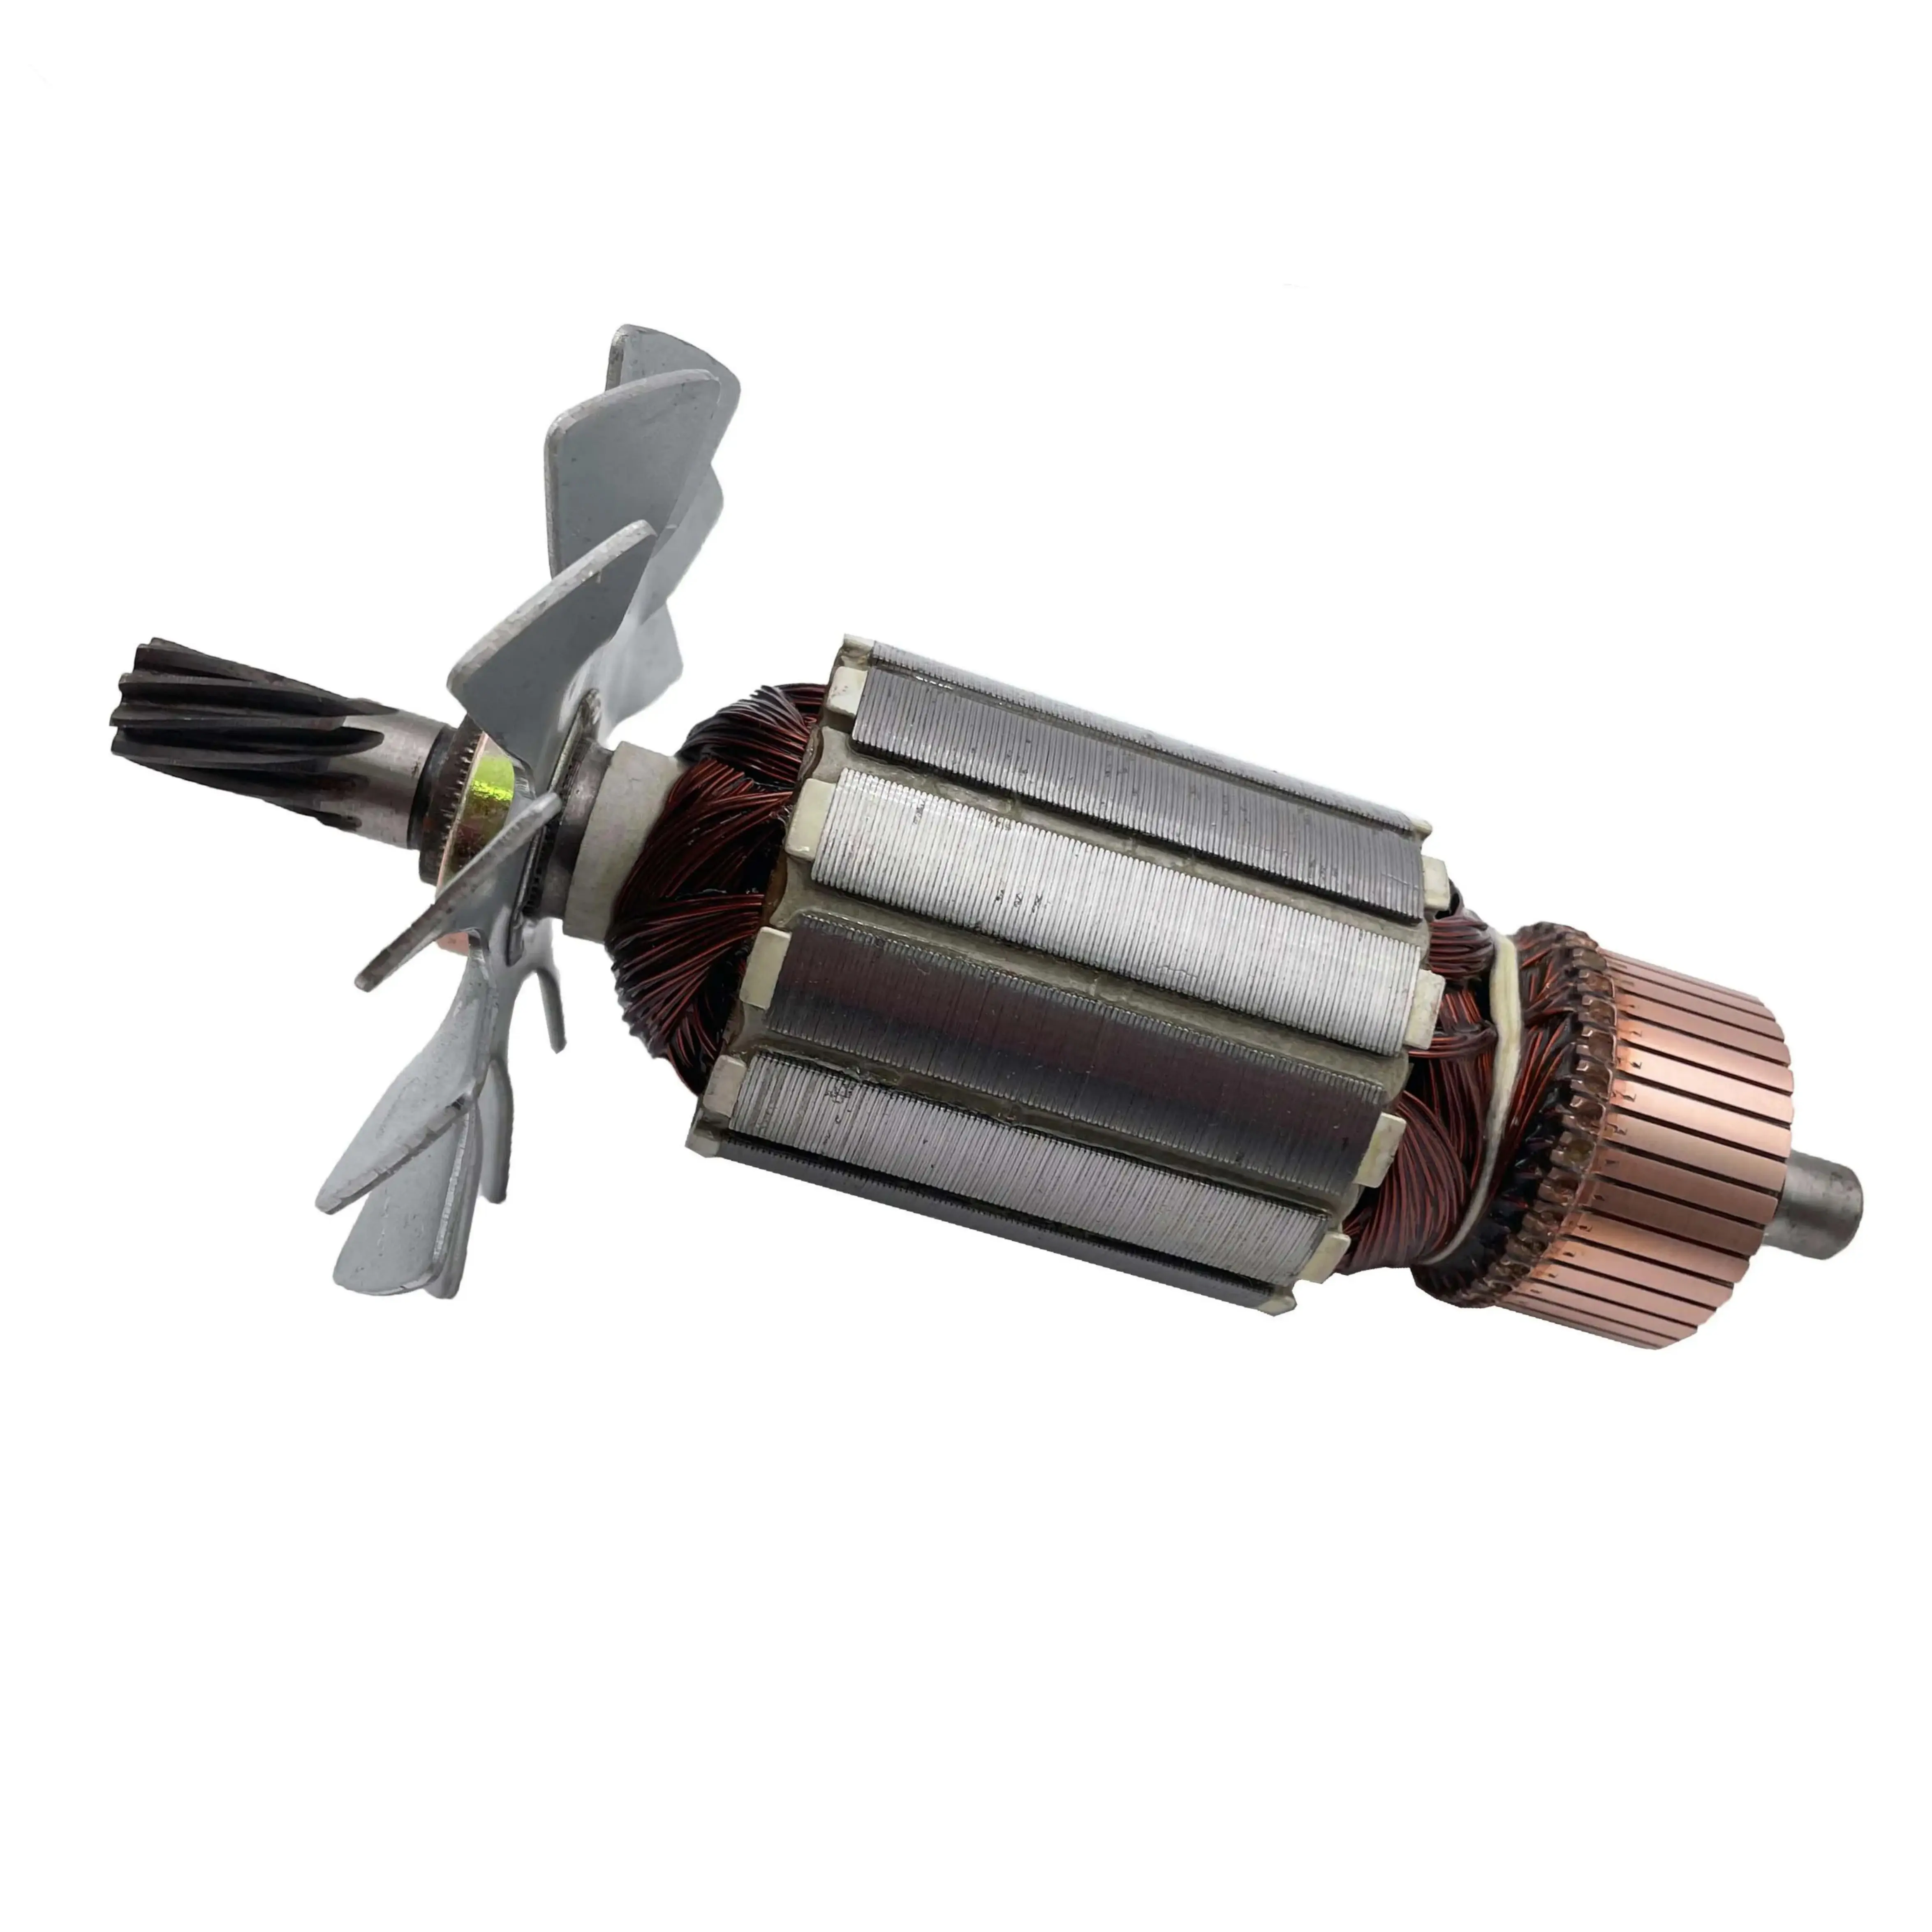 Stator jangkar Rotor angkur AC220V-240V pengganti untuk gergaji rantai Makitas 5016 5016B alat listrik Rotor dewasa